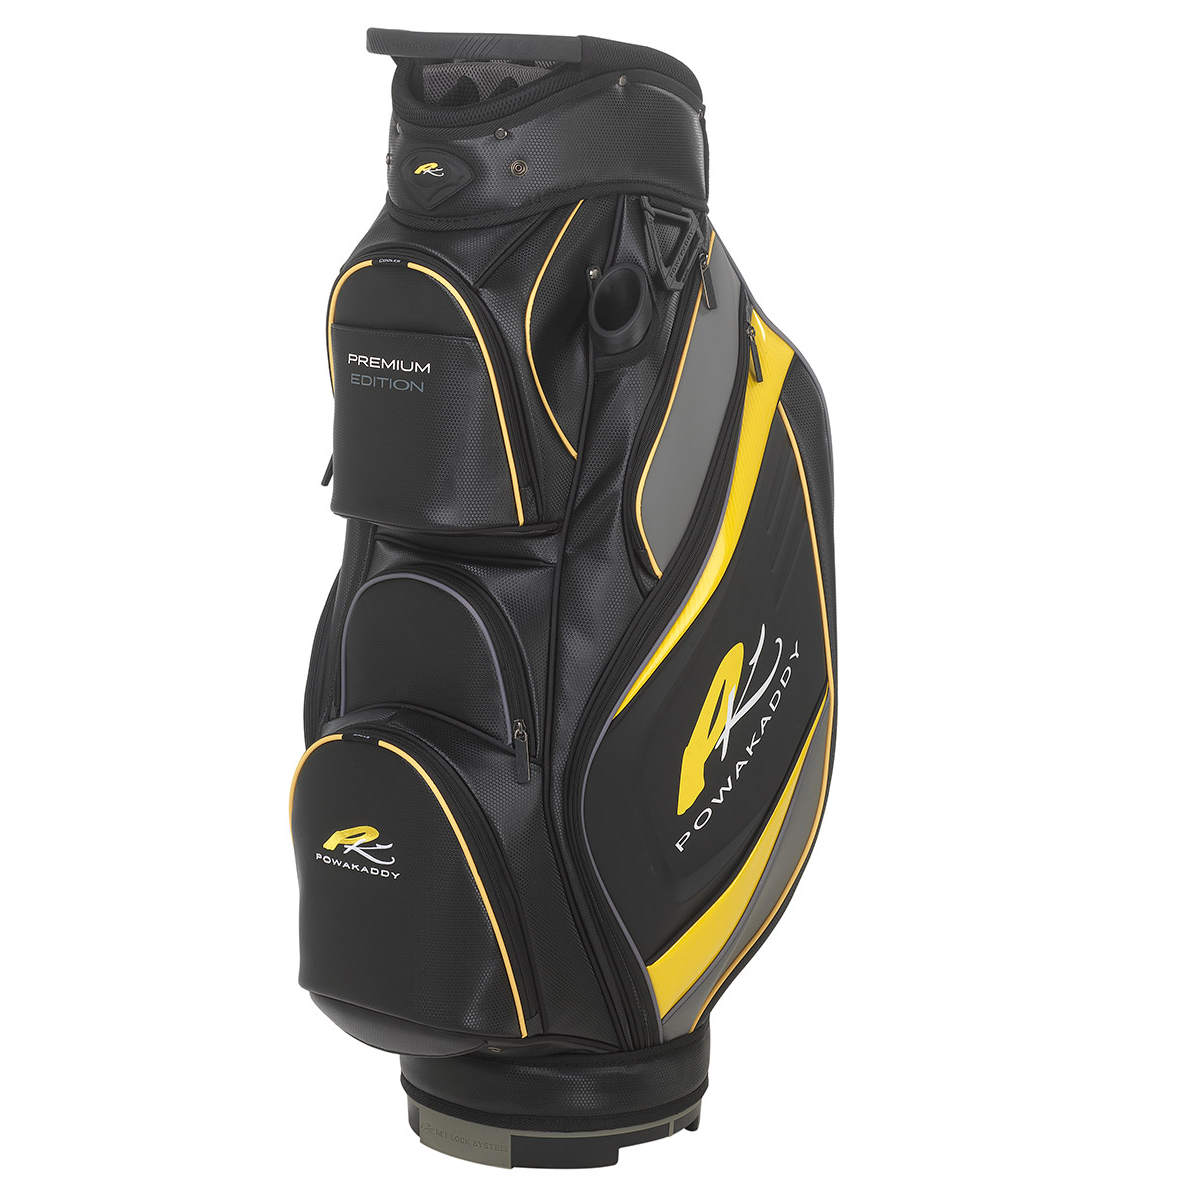 PowaKaddy Premium Edition Cart Bag | Online Golf